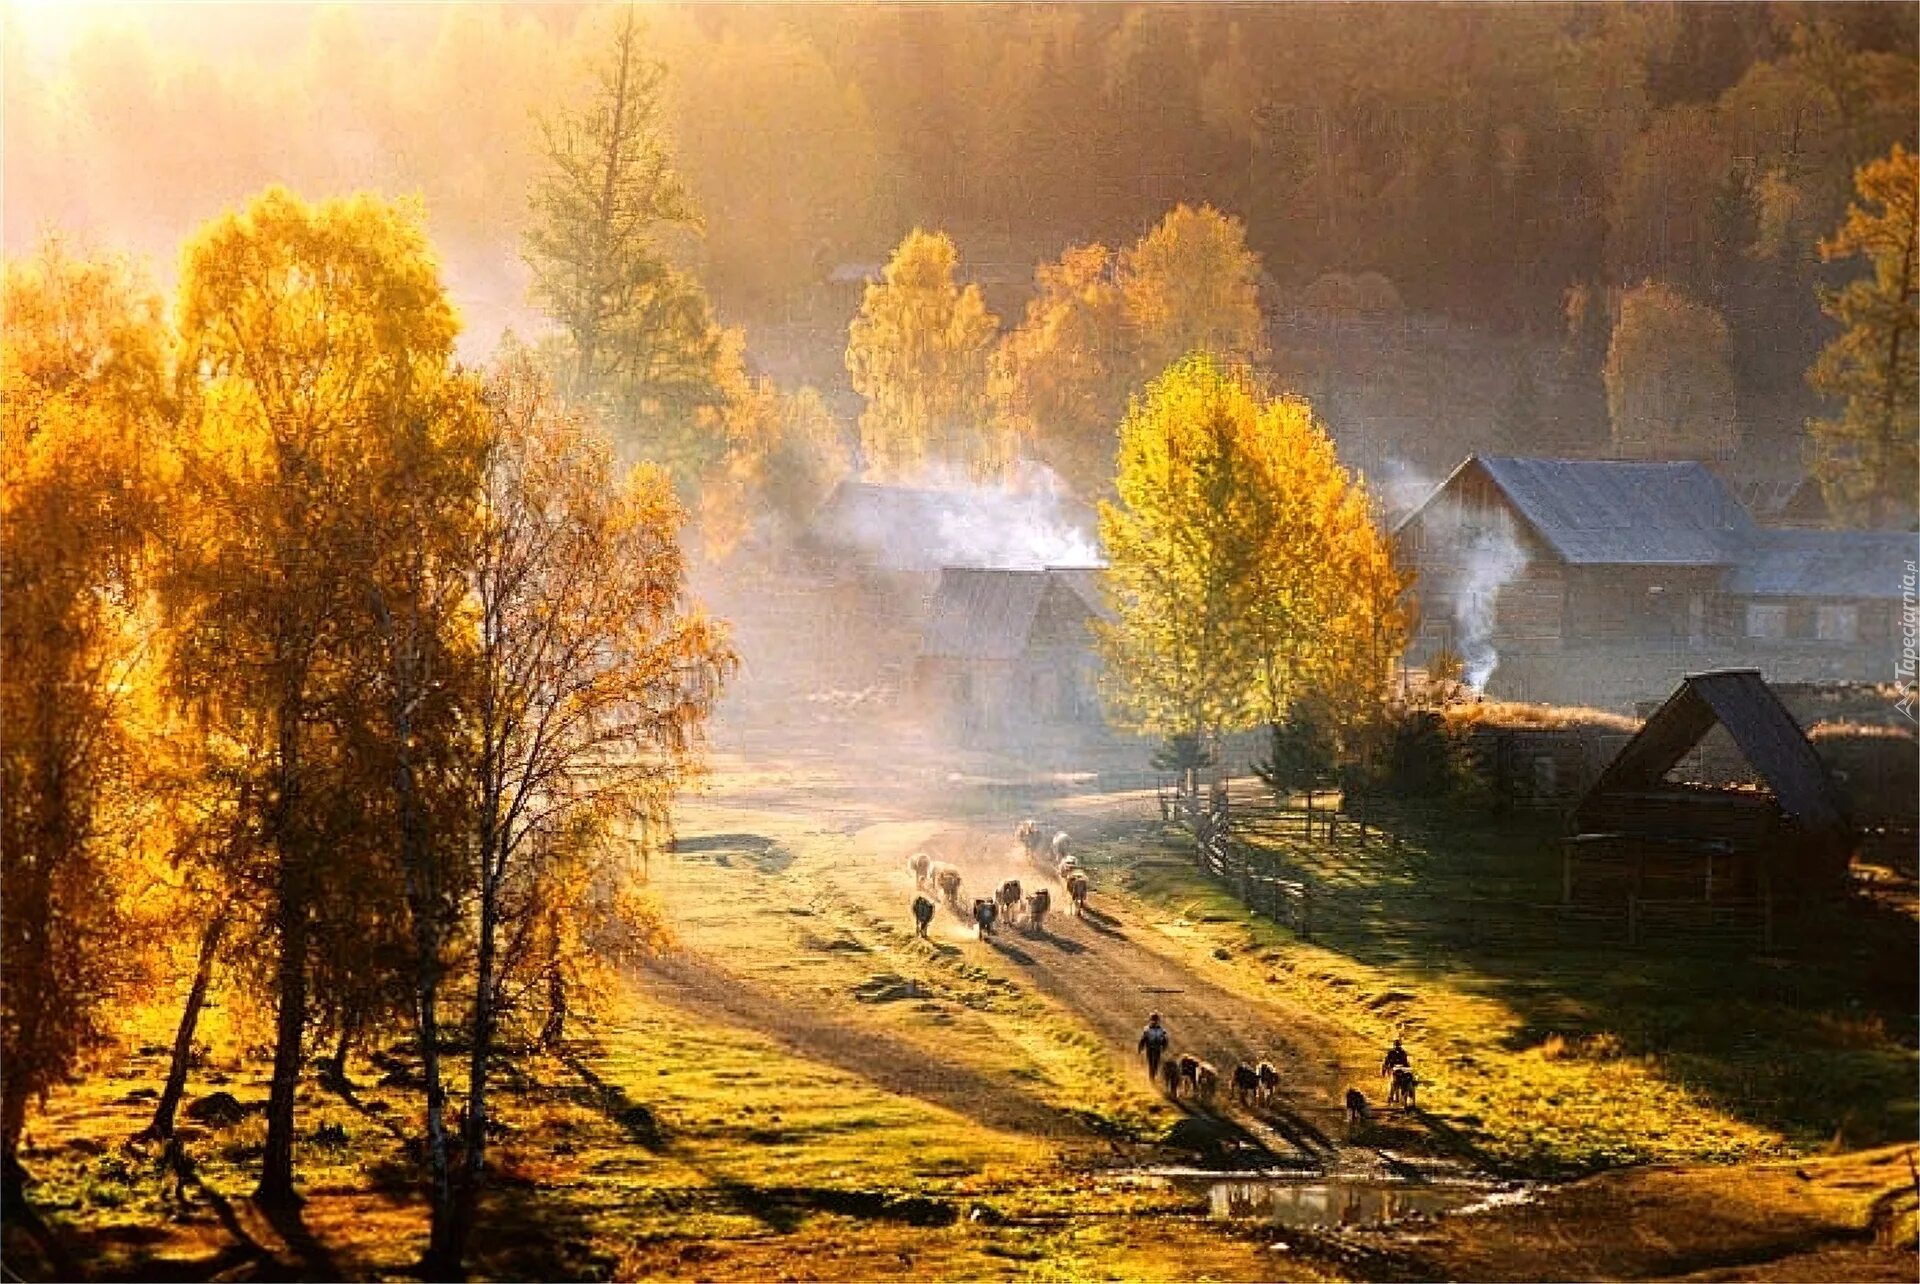 Мало тепло деревня. Осень в деревне. Утро в деревне. Осенний деревенский пейзаж. Деревня осенью.